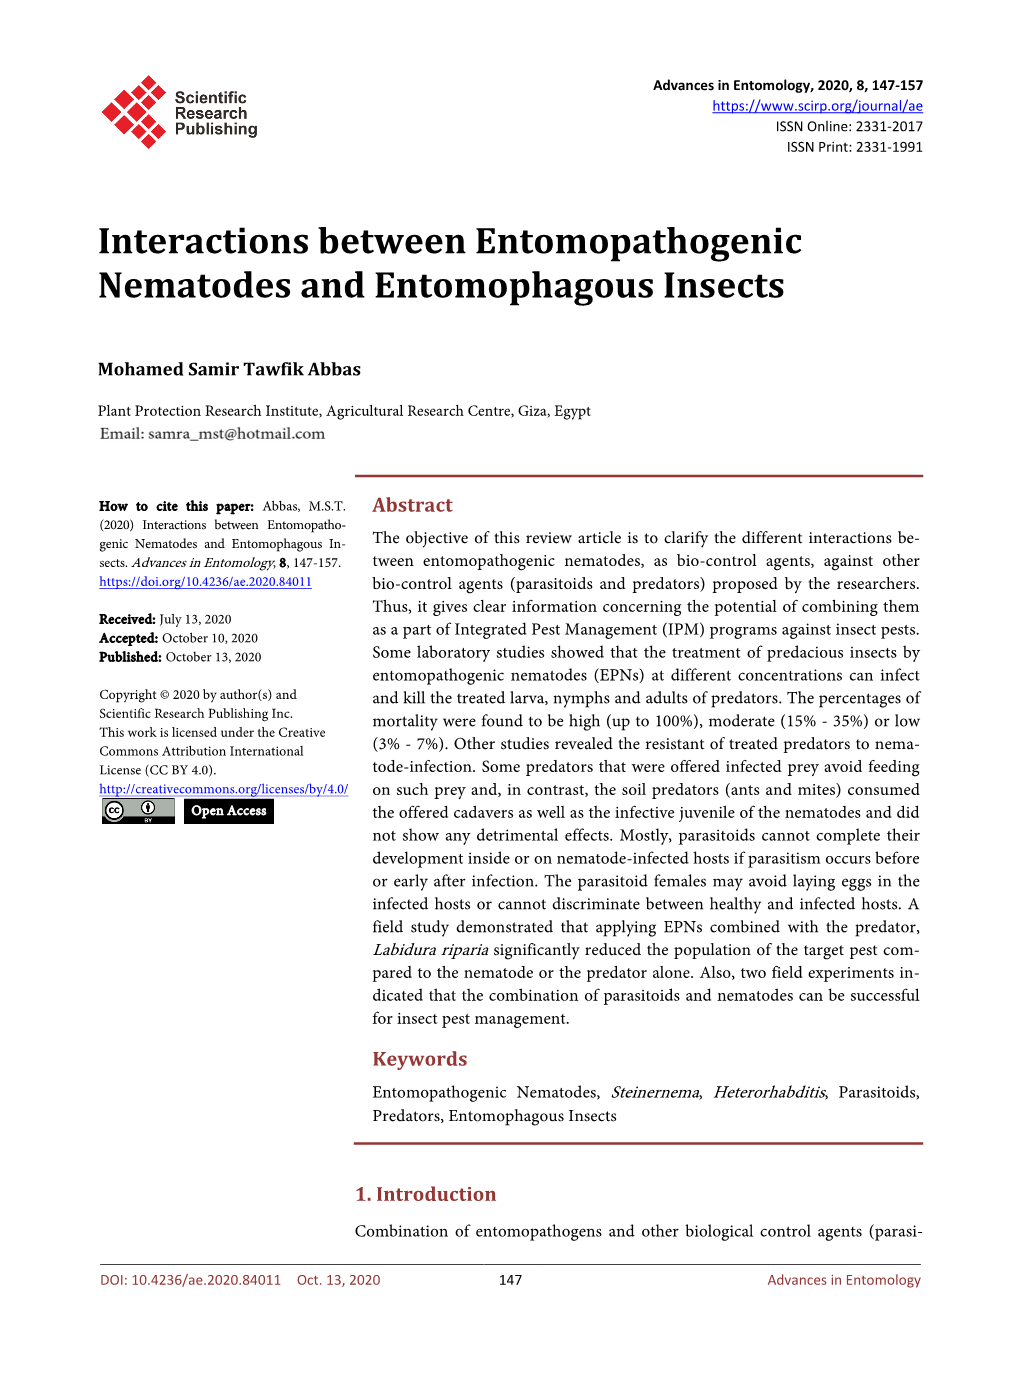 Interactions Between Entomopathogenic Nematodes and Entomophagous Insects